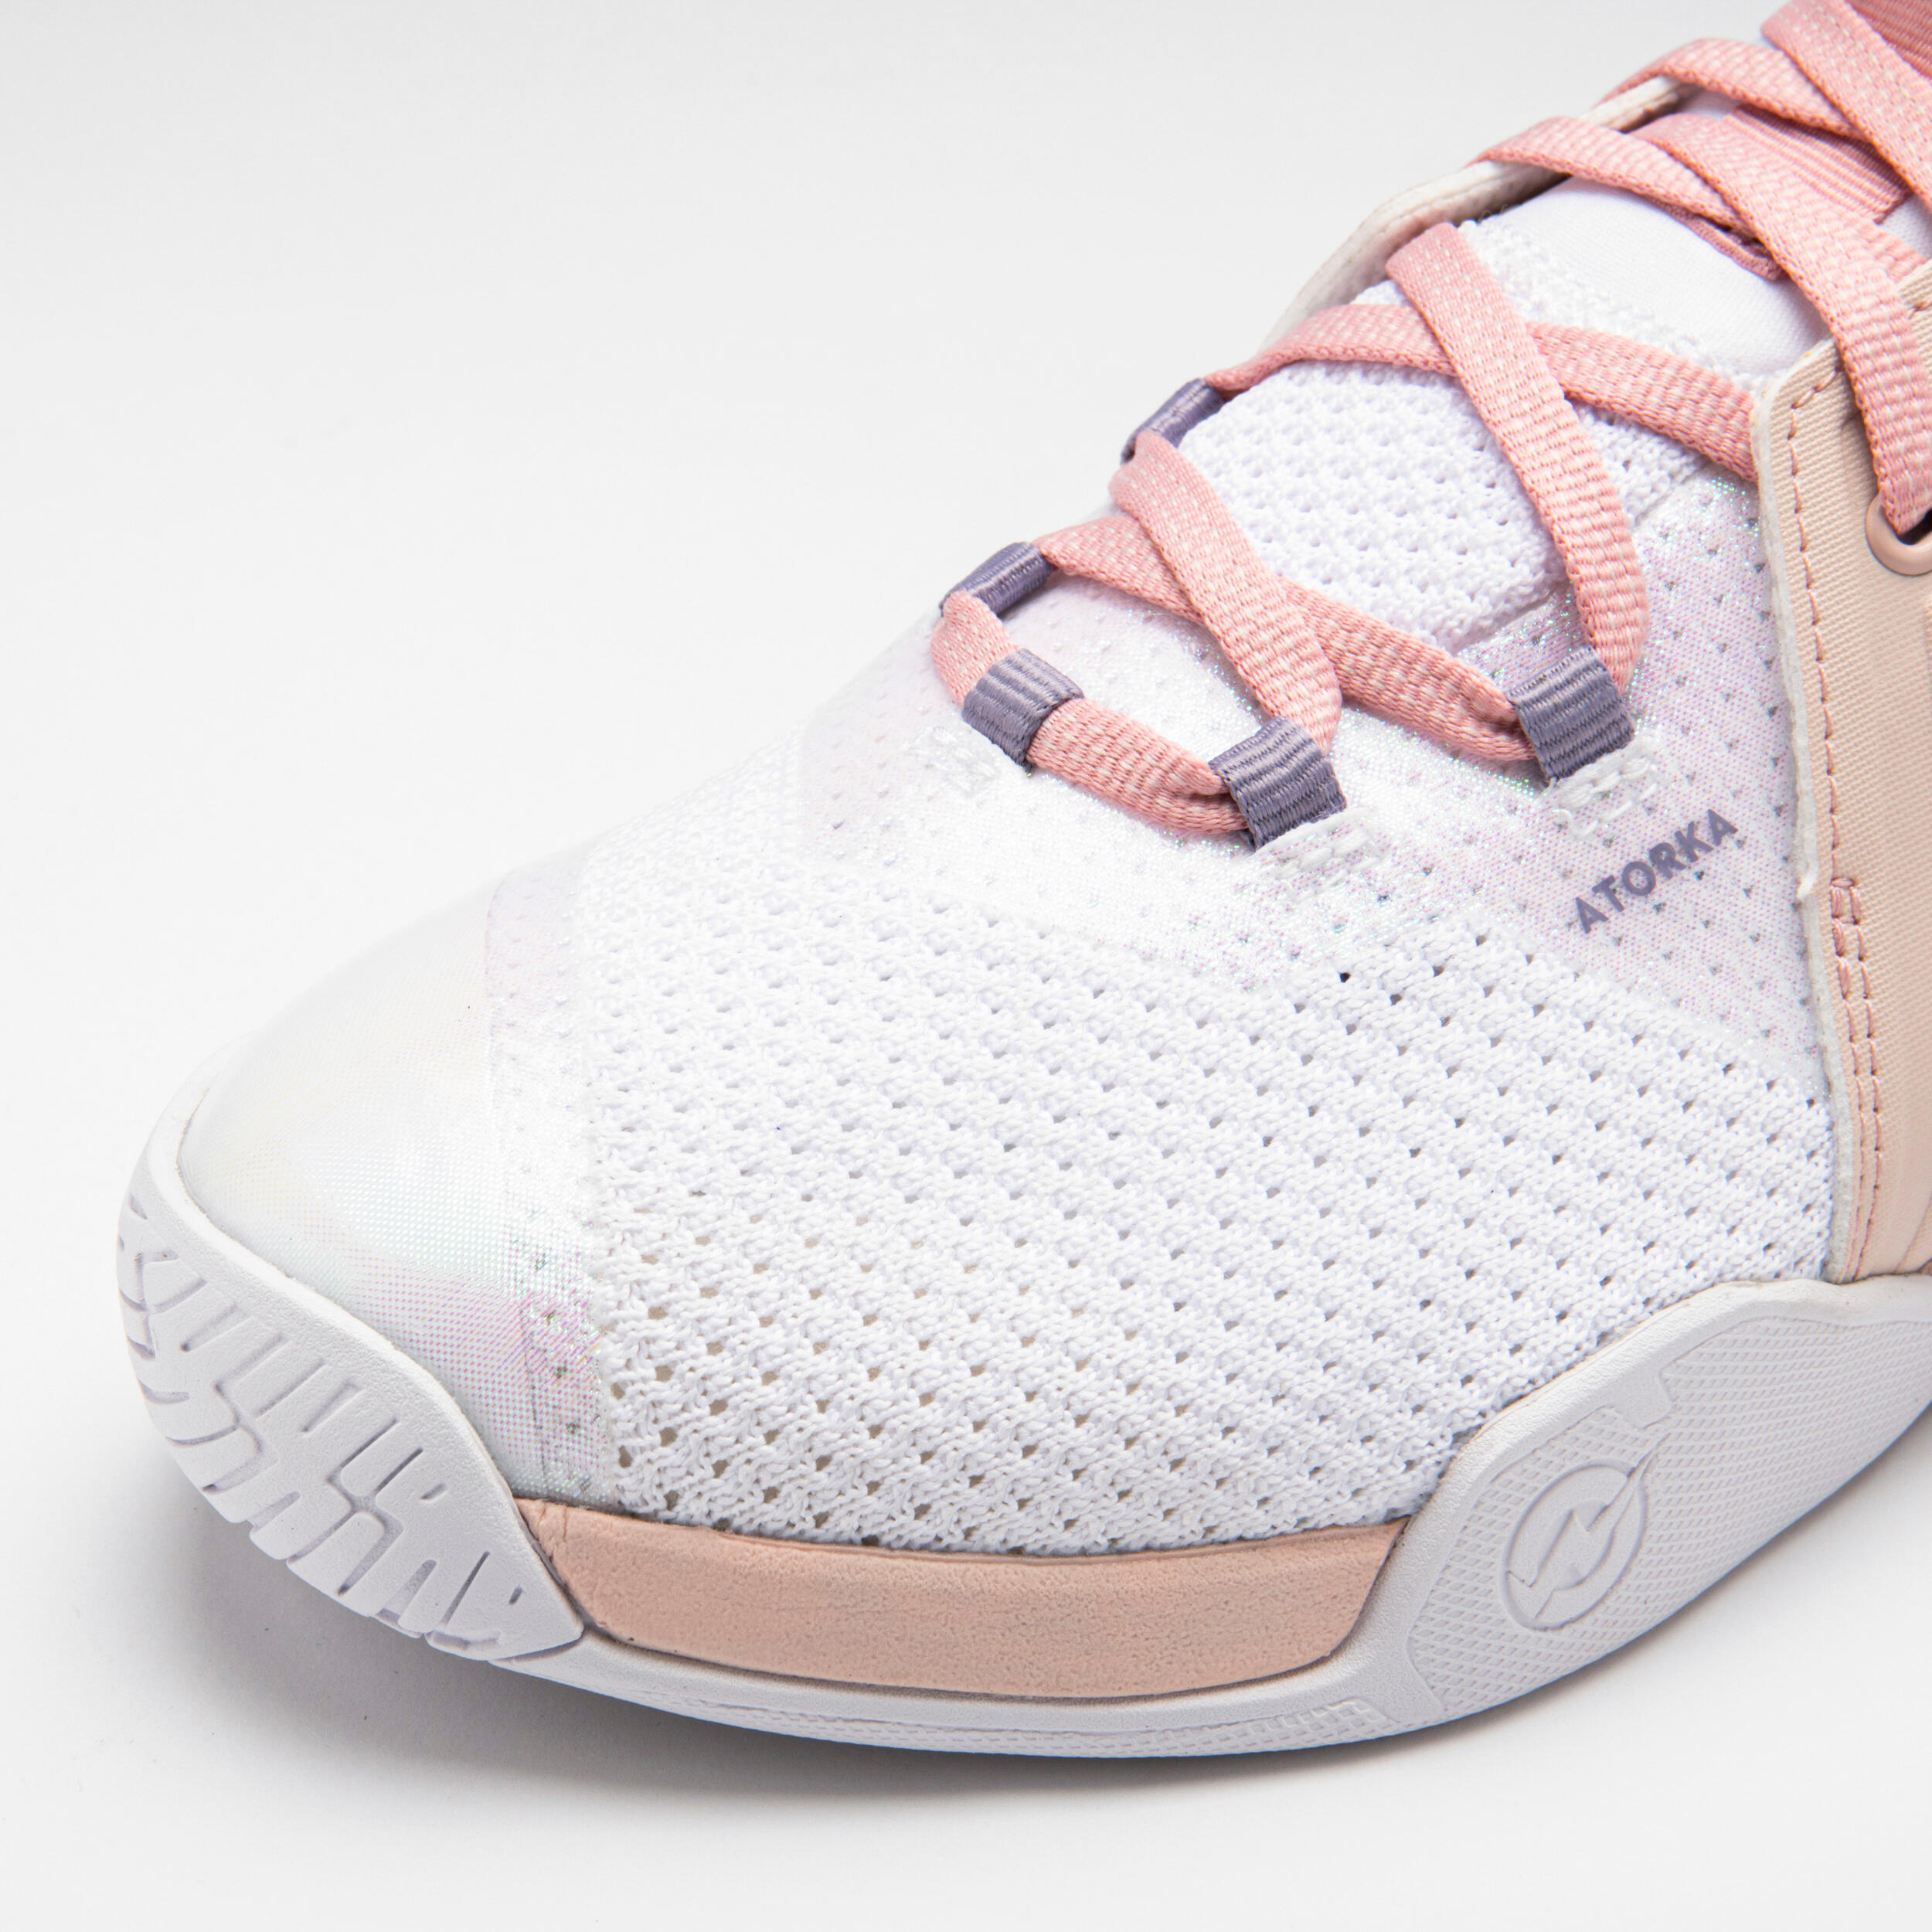 Men's/Women's Handball Shoes H500 Faster - Pink/White 12/17